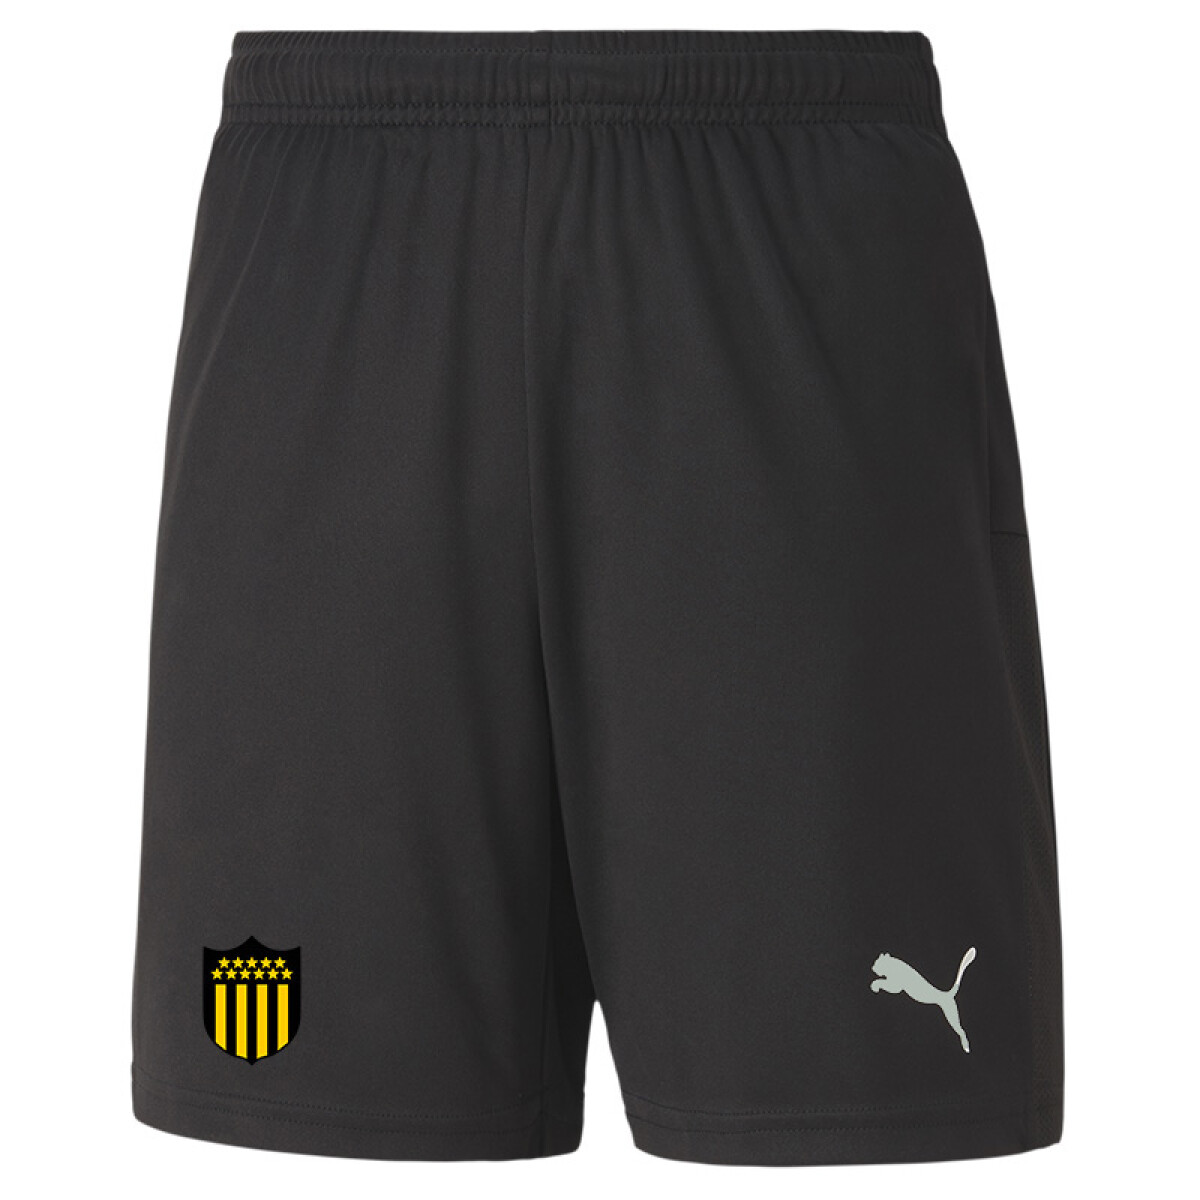 Peñarol home shorts 22 - 77273001 - Neg/amar. 